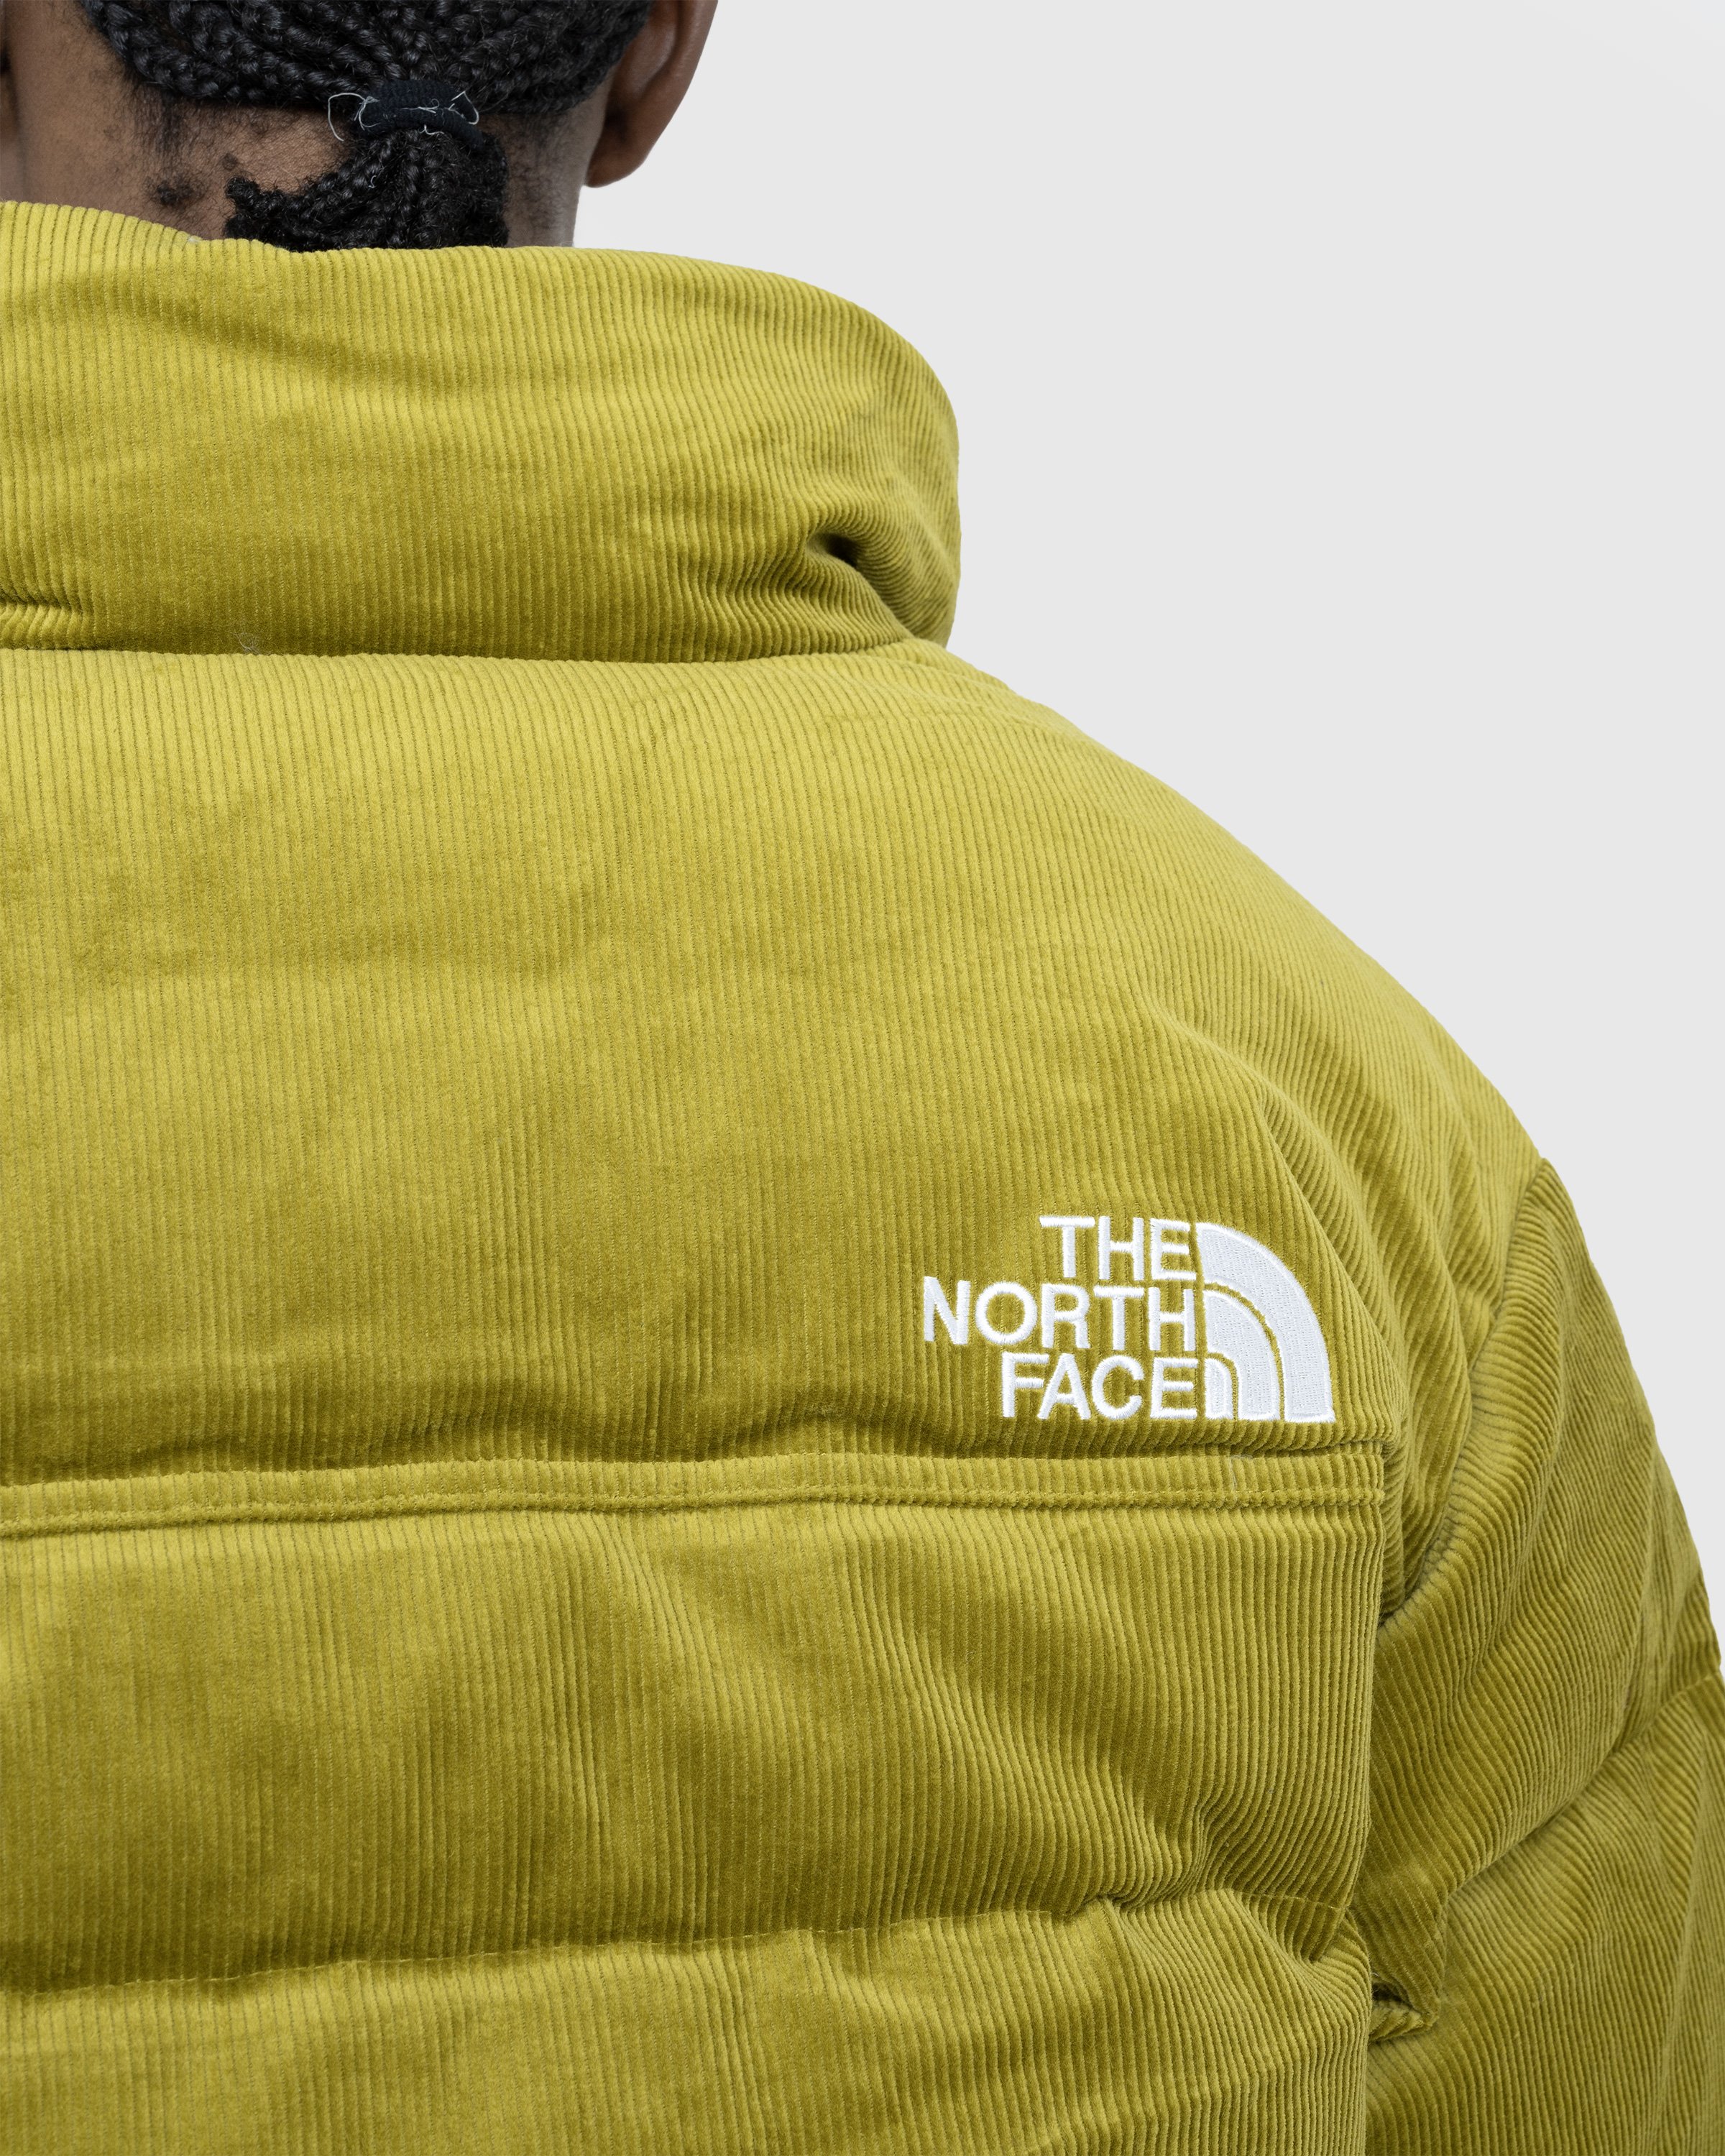 The North Face - M 92 REVERSIBLE NUPTSE JACKET - Clothing - Green - Image 7